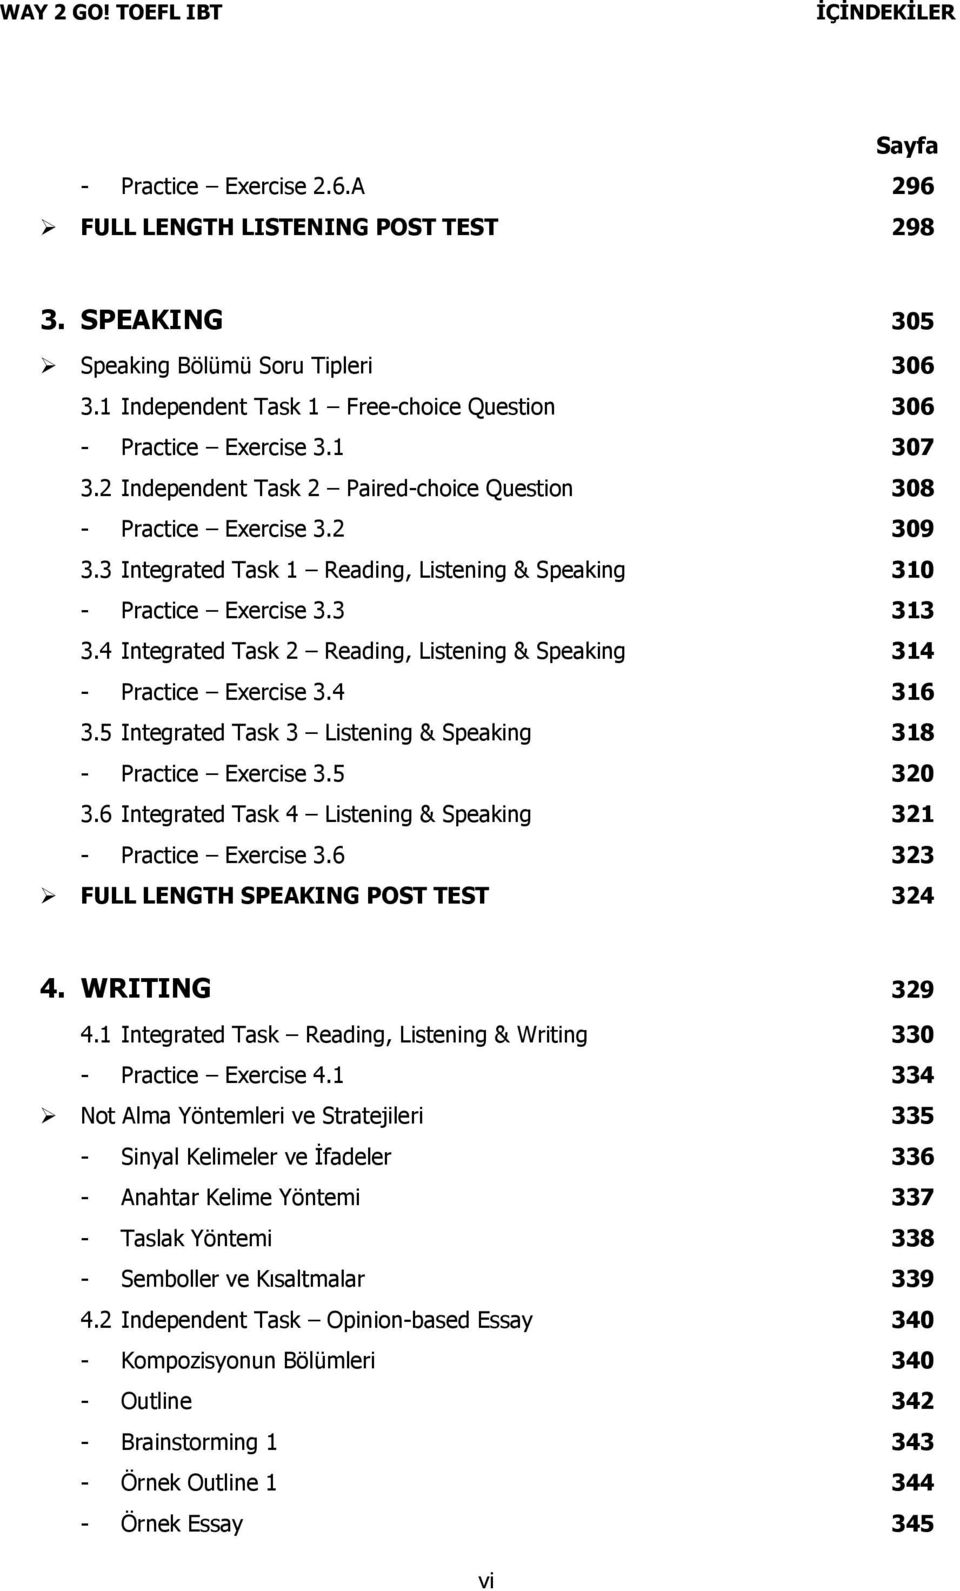 4 Integrated Task 2 Reading, Listening & Speaking 314 - Practice Exercise 3.4 316 3.5 Integrated Task 3 Listening & Speaking 318 - Practice Exercise 3.5 320 3.